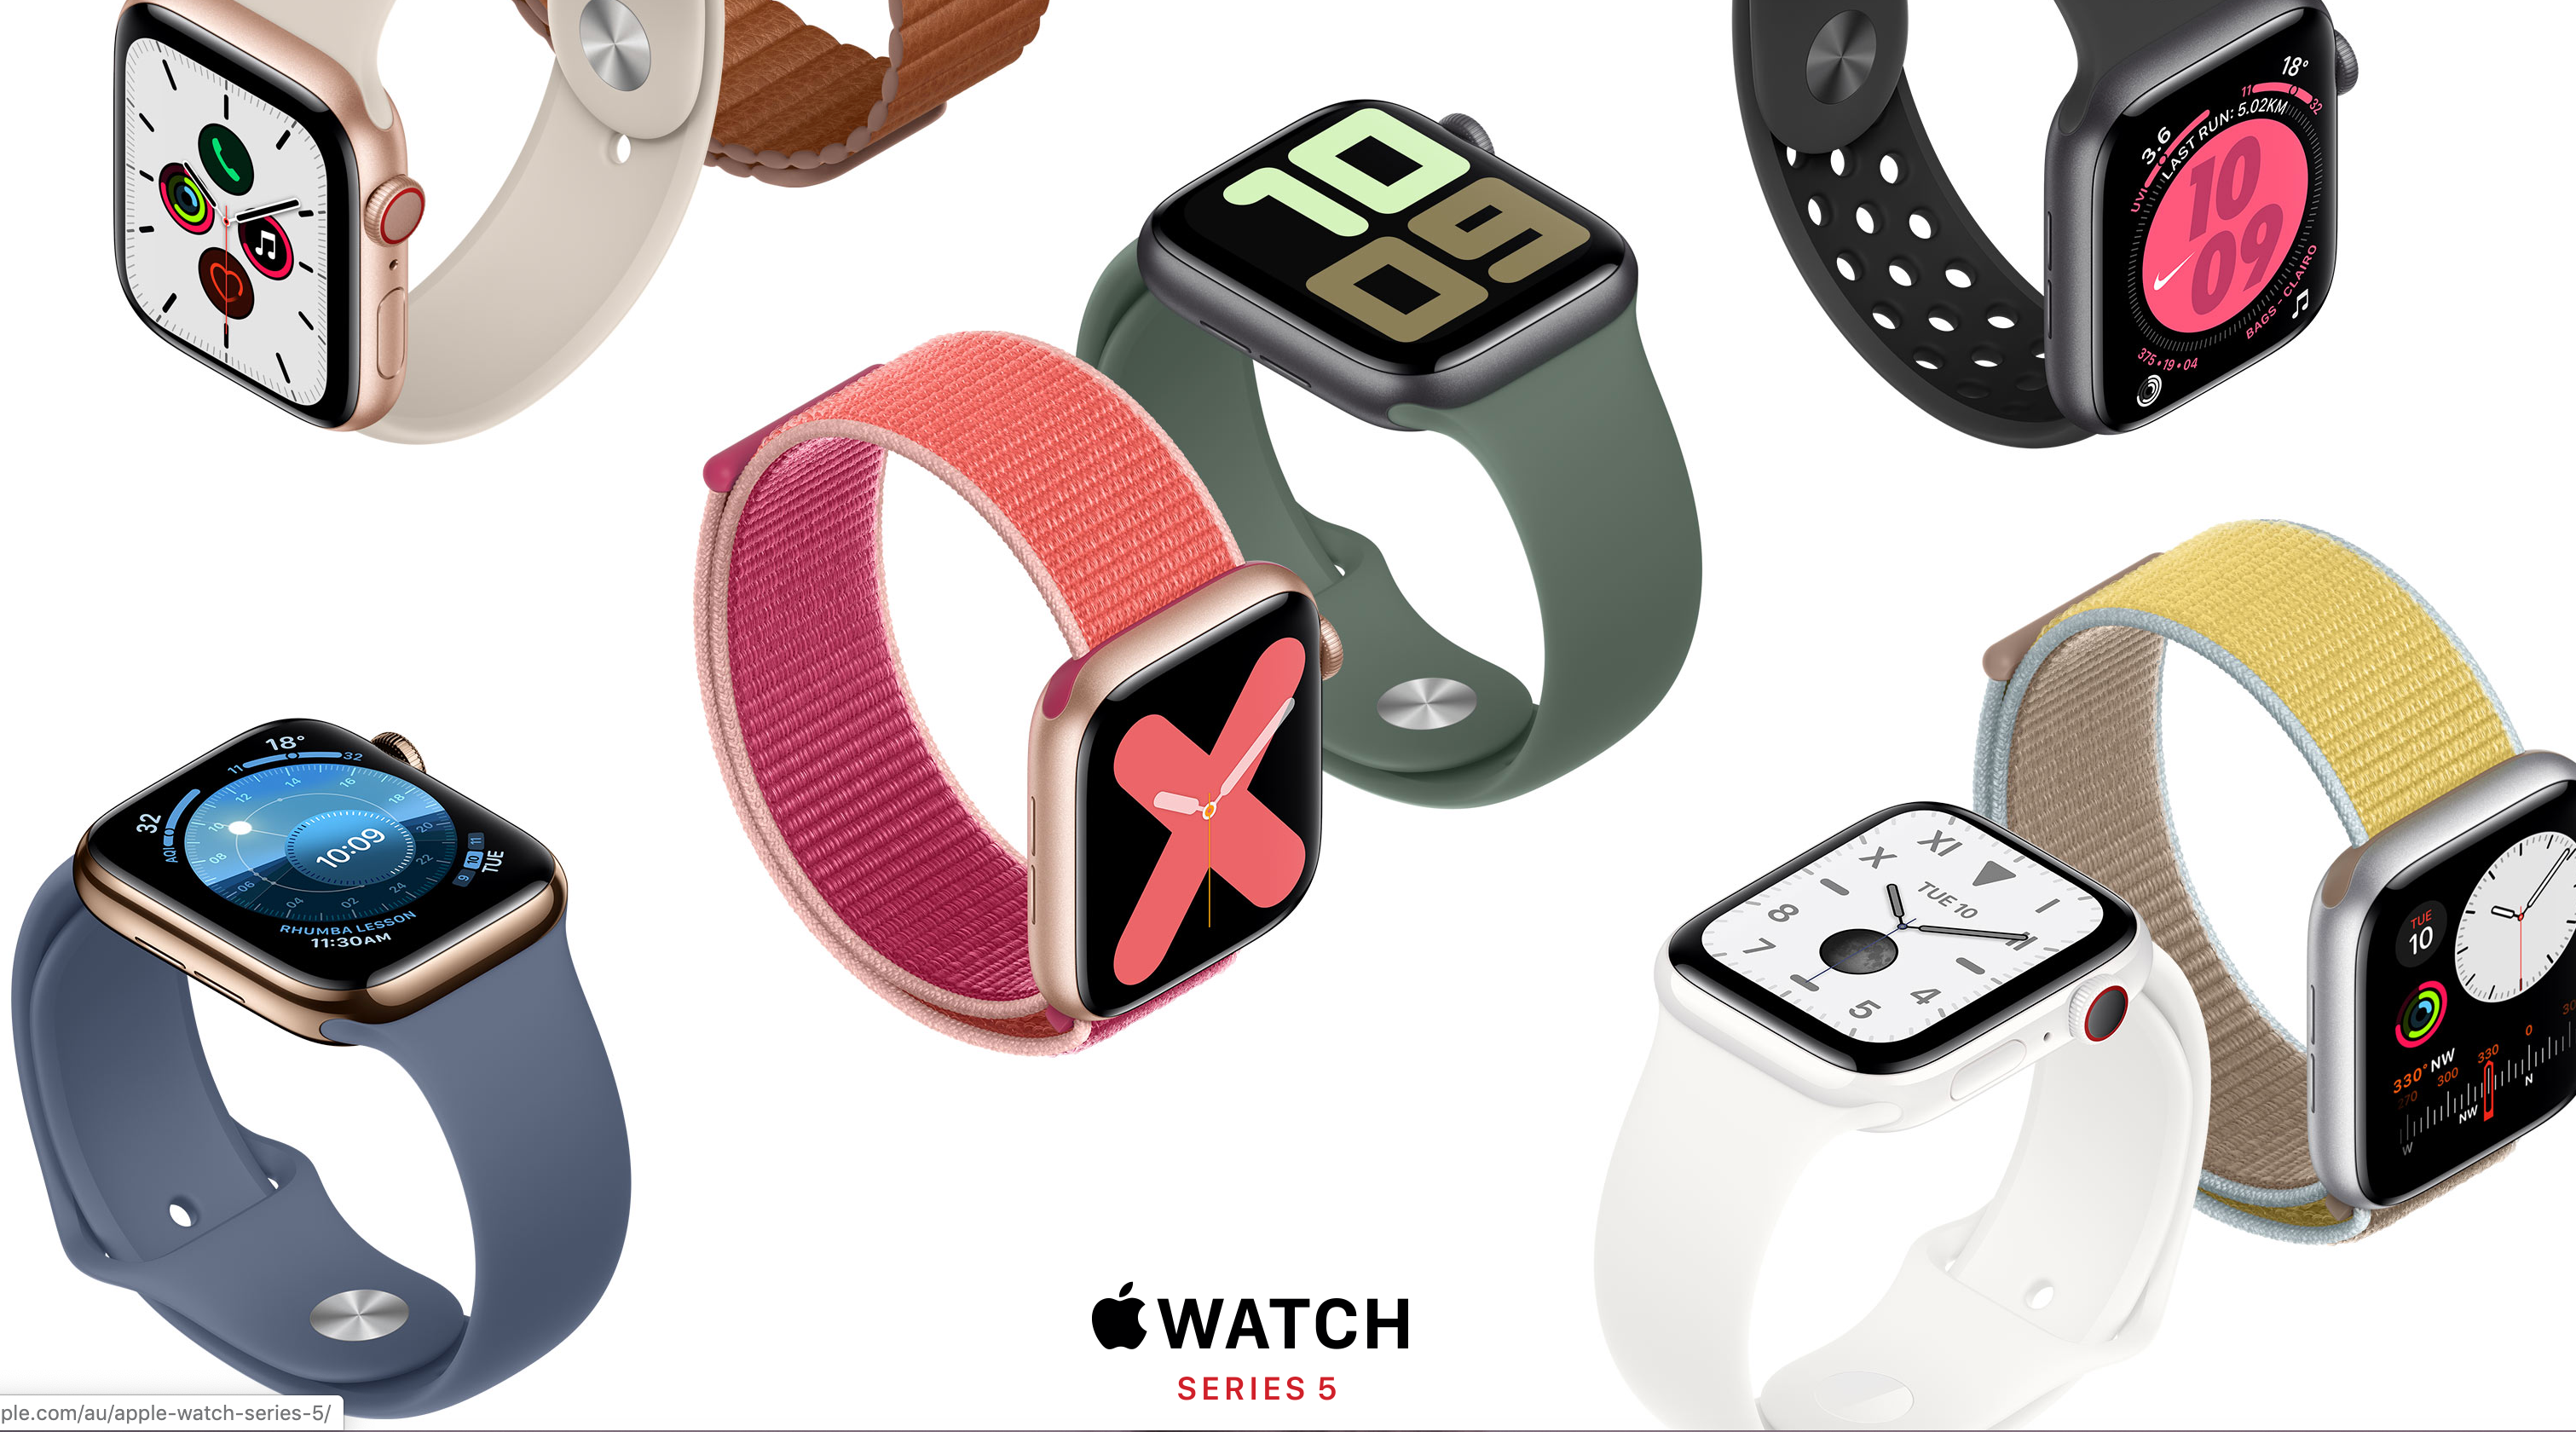 The Apple Watch Series 5, An 